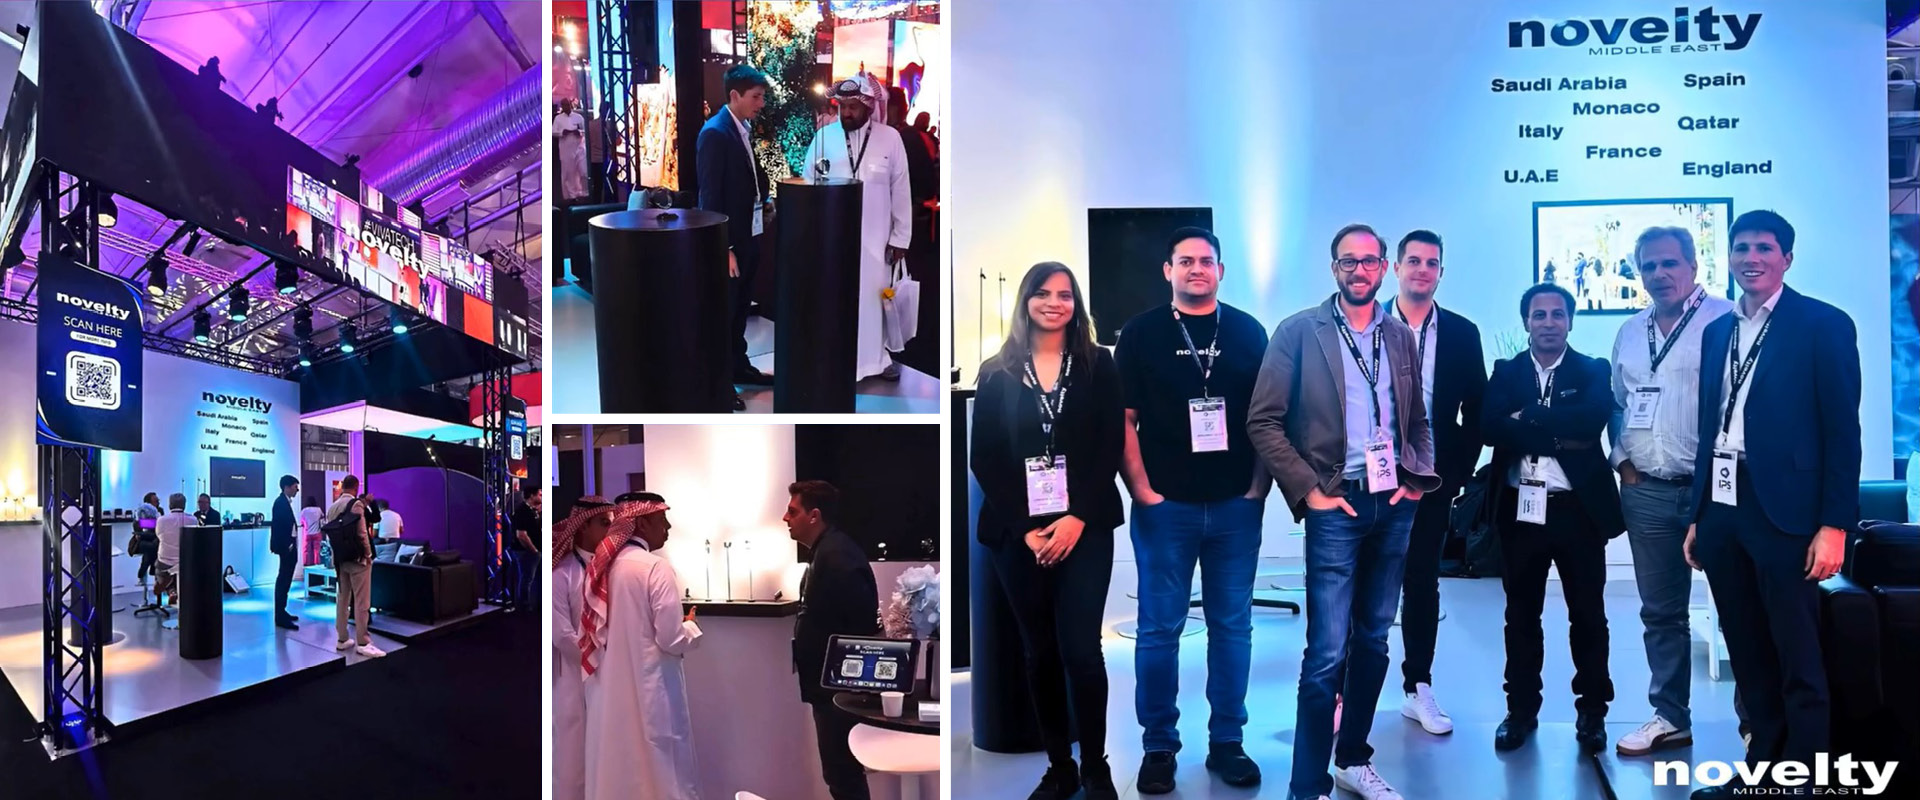 Visuel Novelty Middle East au SAUDI LIGHT & SOUND (SLS) Expo à Riyadh